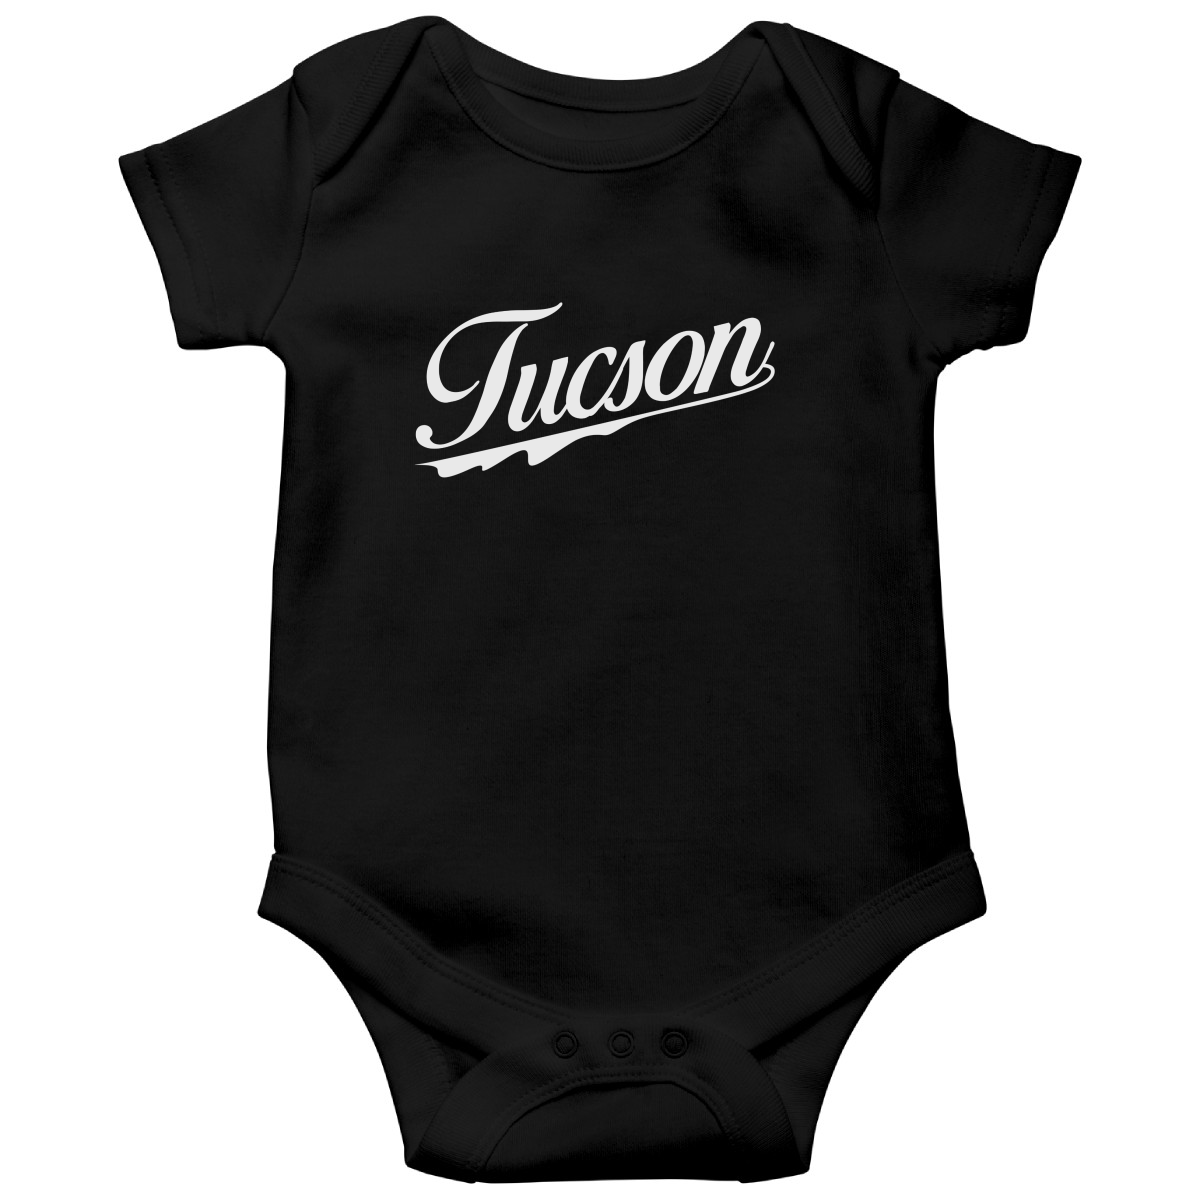 Tucson Baby Bodysuit | Black